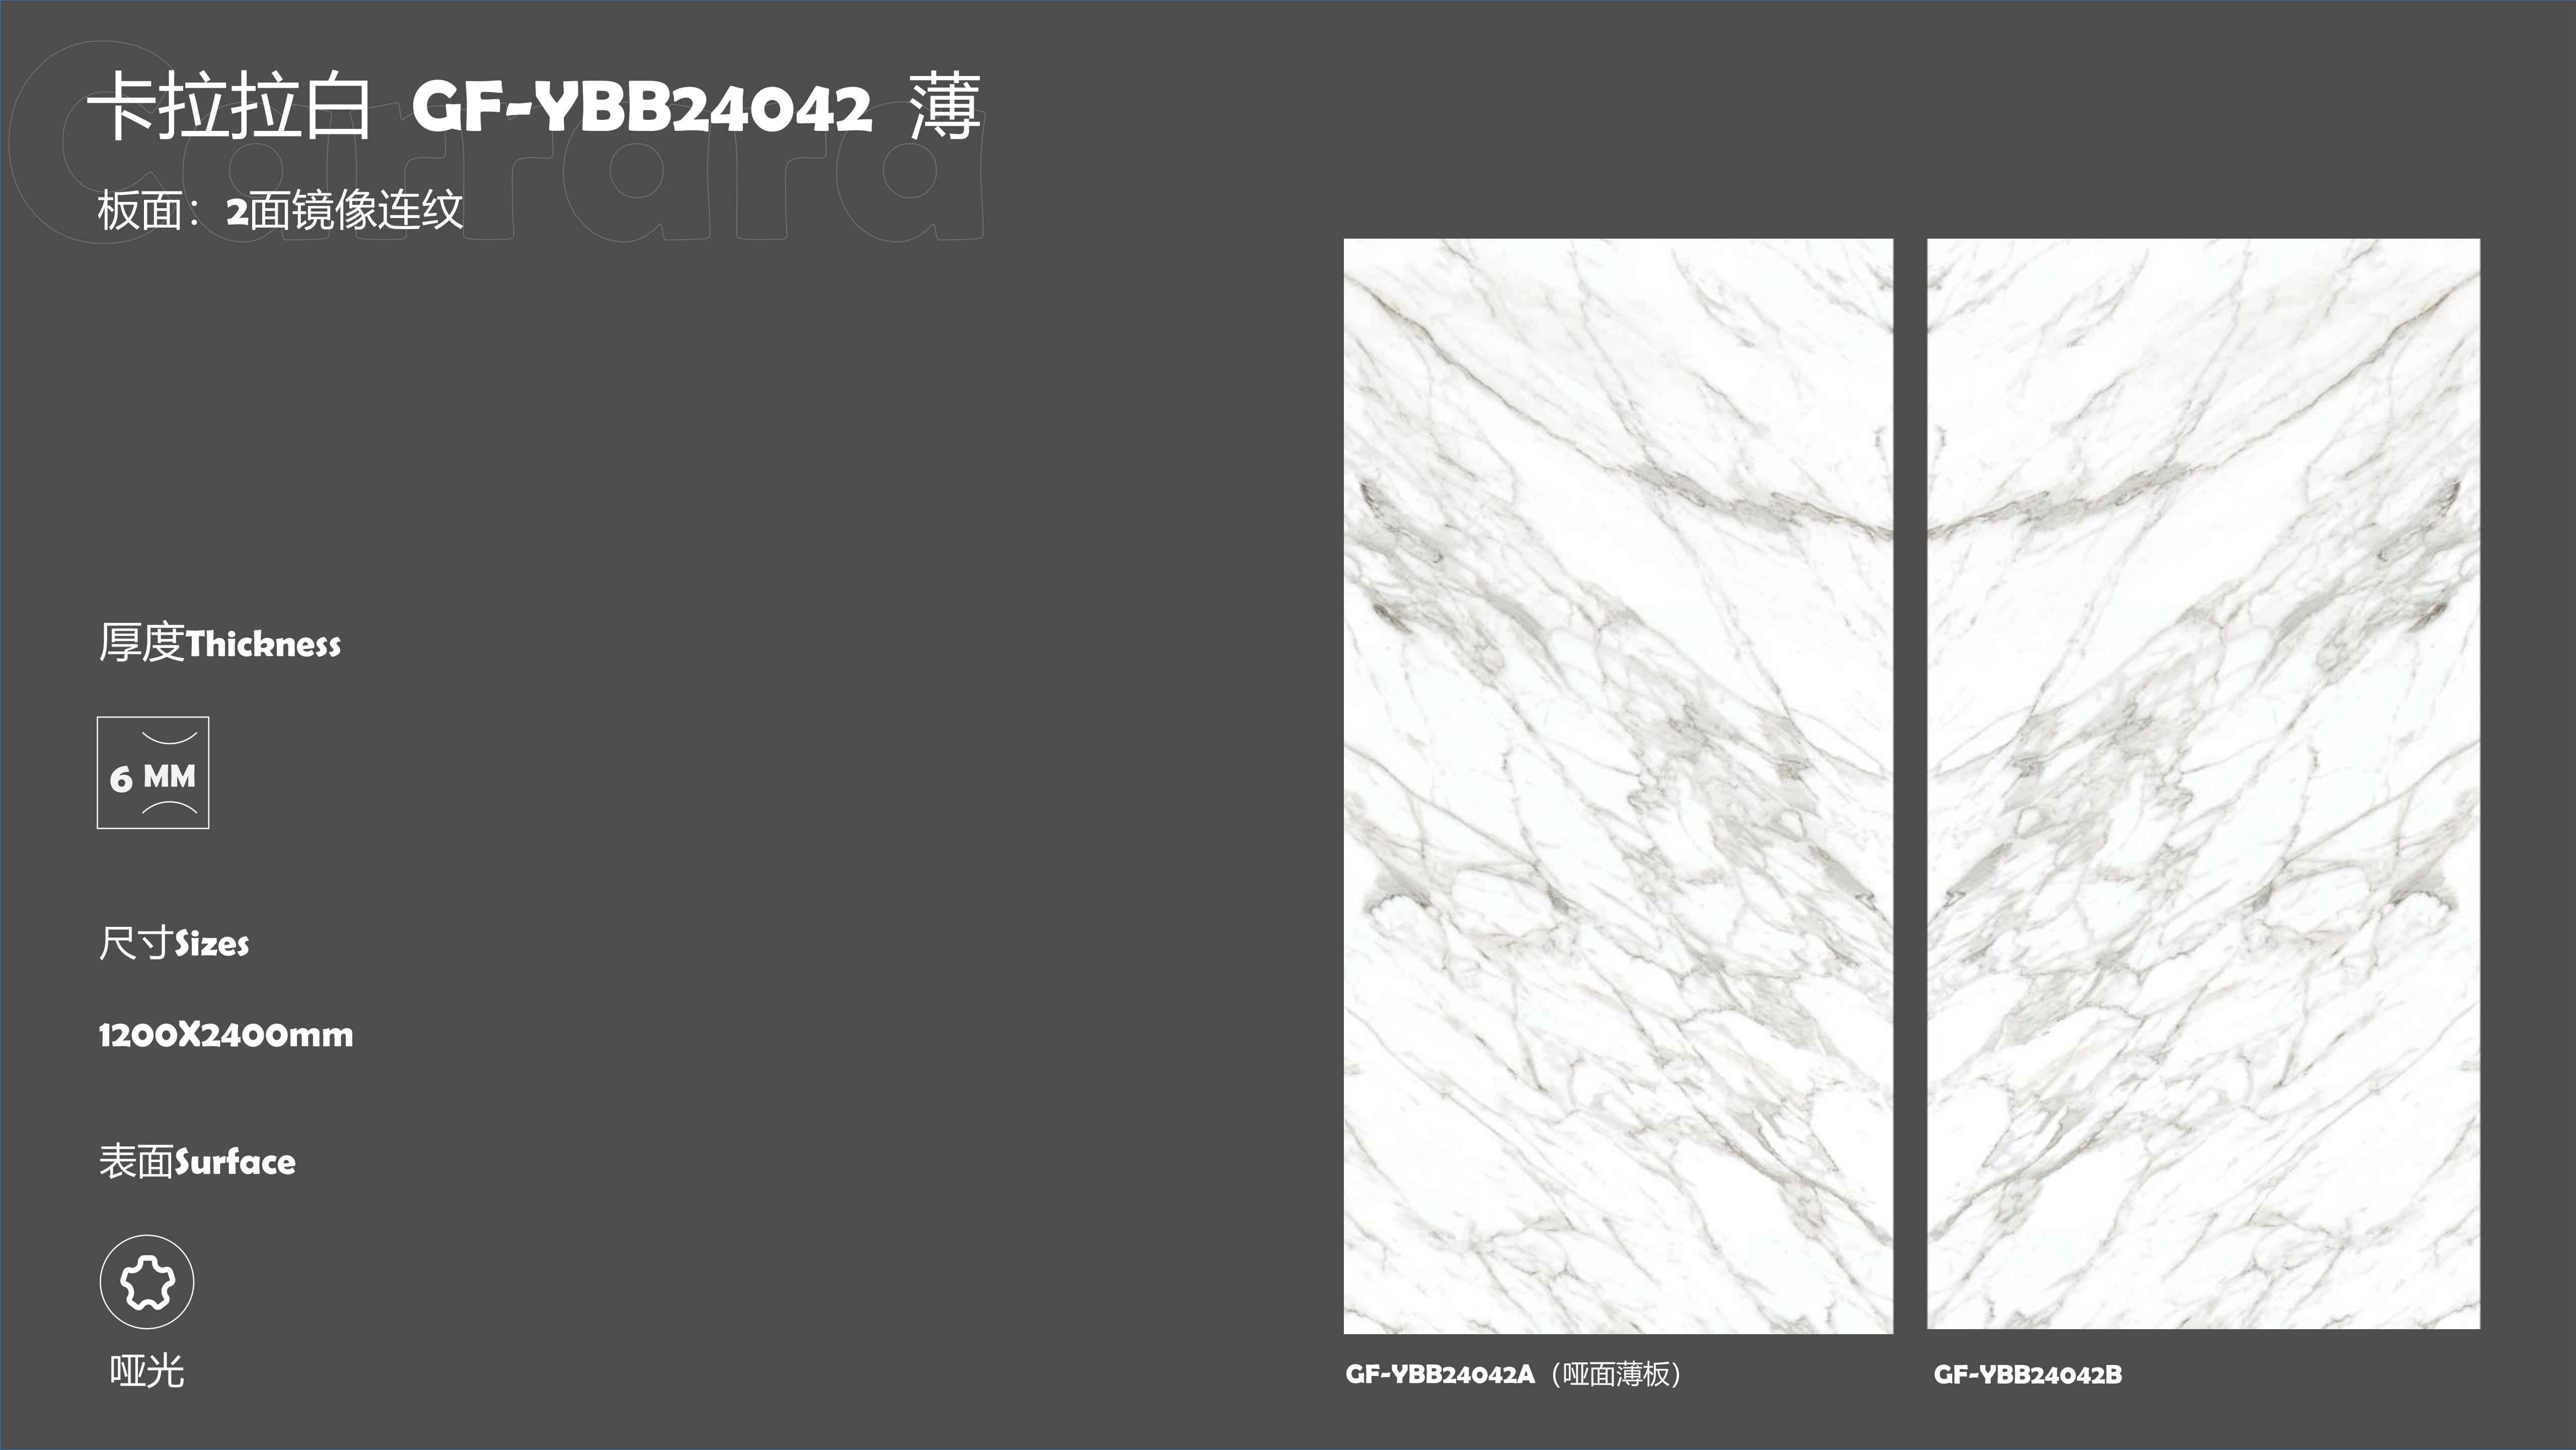 Фарфоровые плиты 2400x1200x6 мм Carrara White Book подобраны
